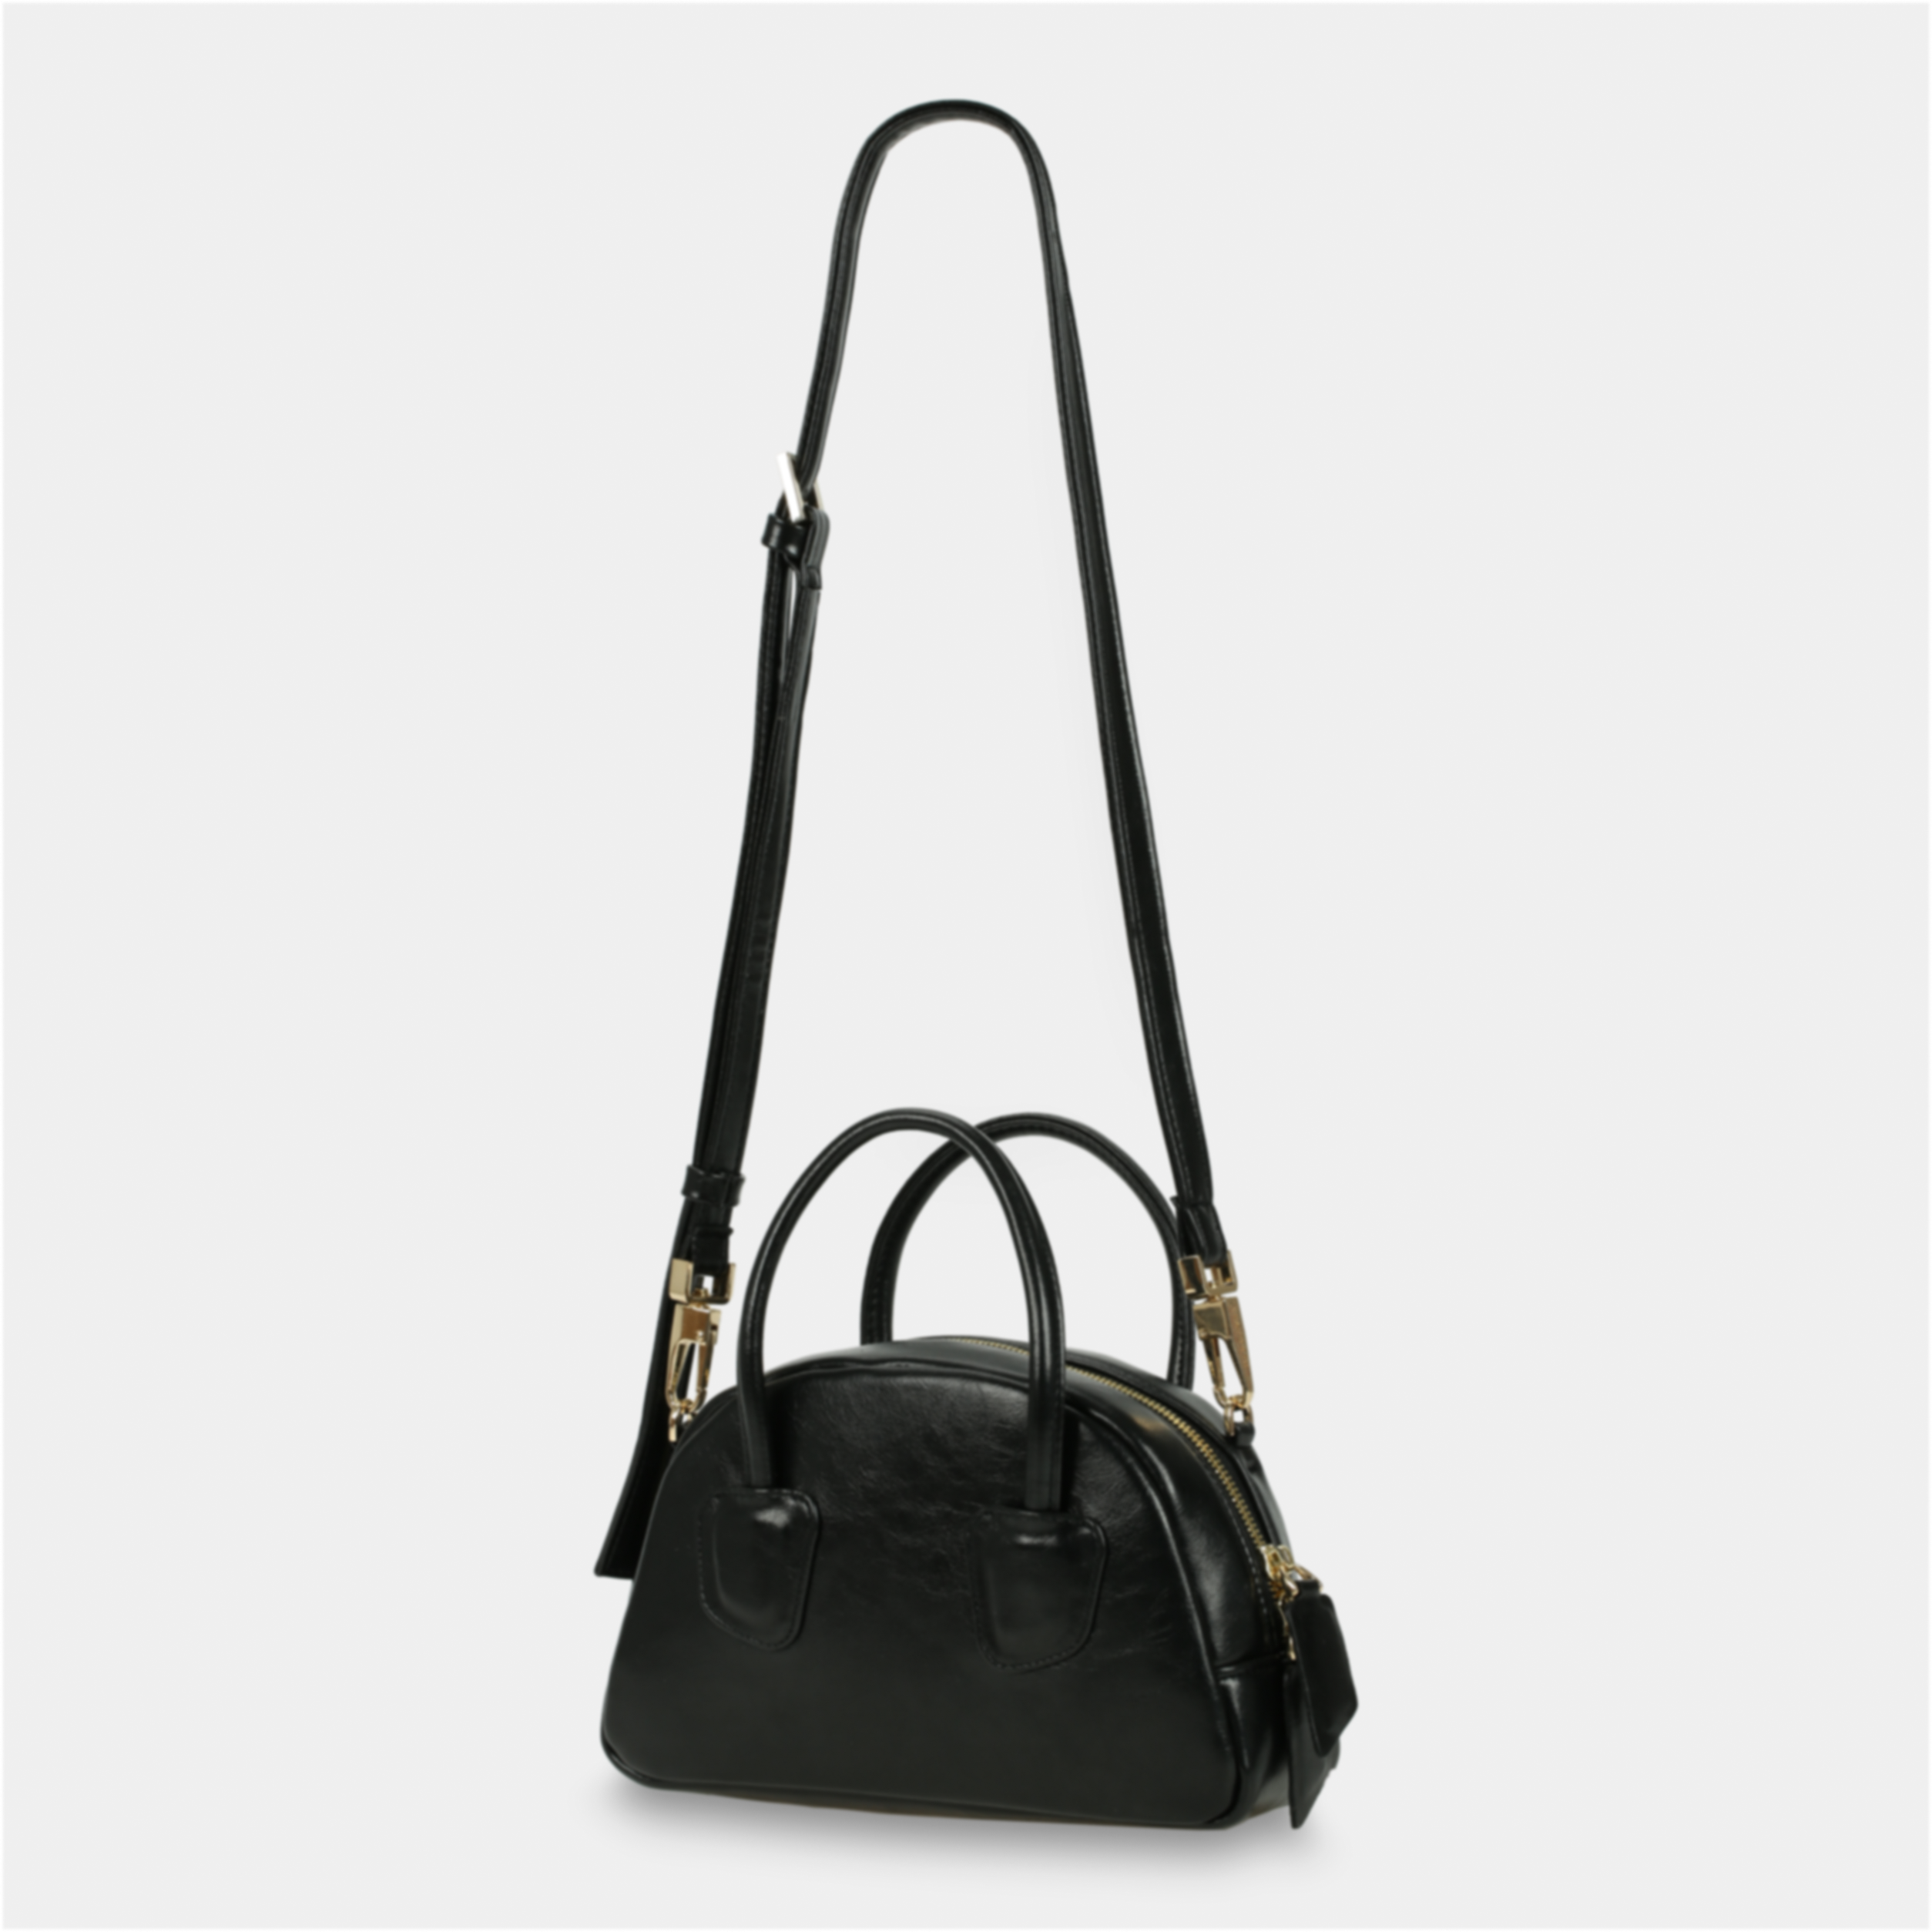 Black TACOS handbag large size (M)